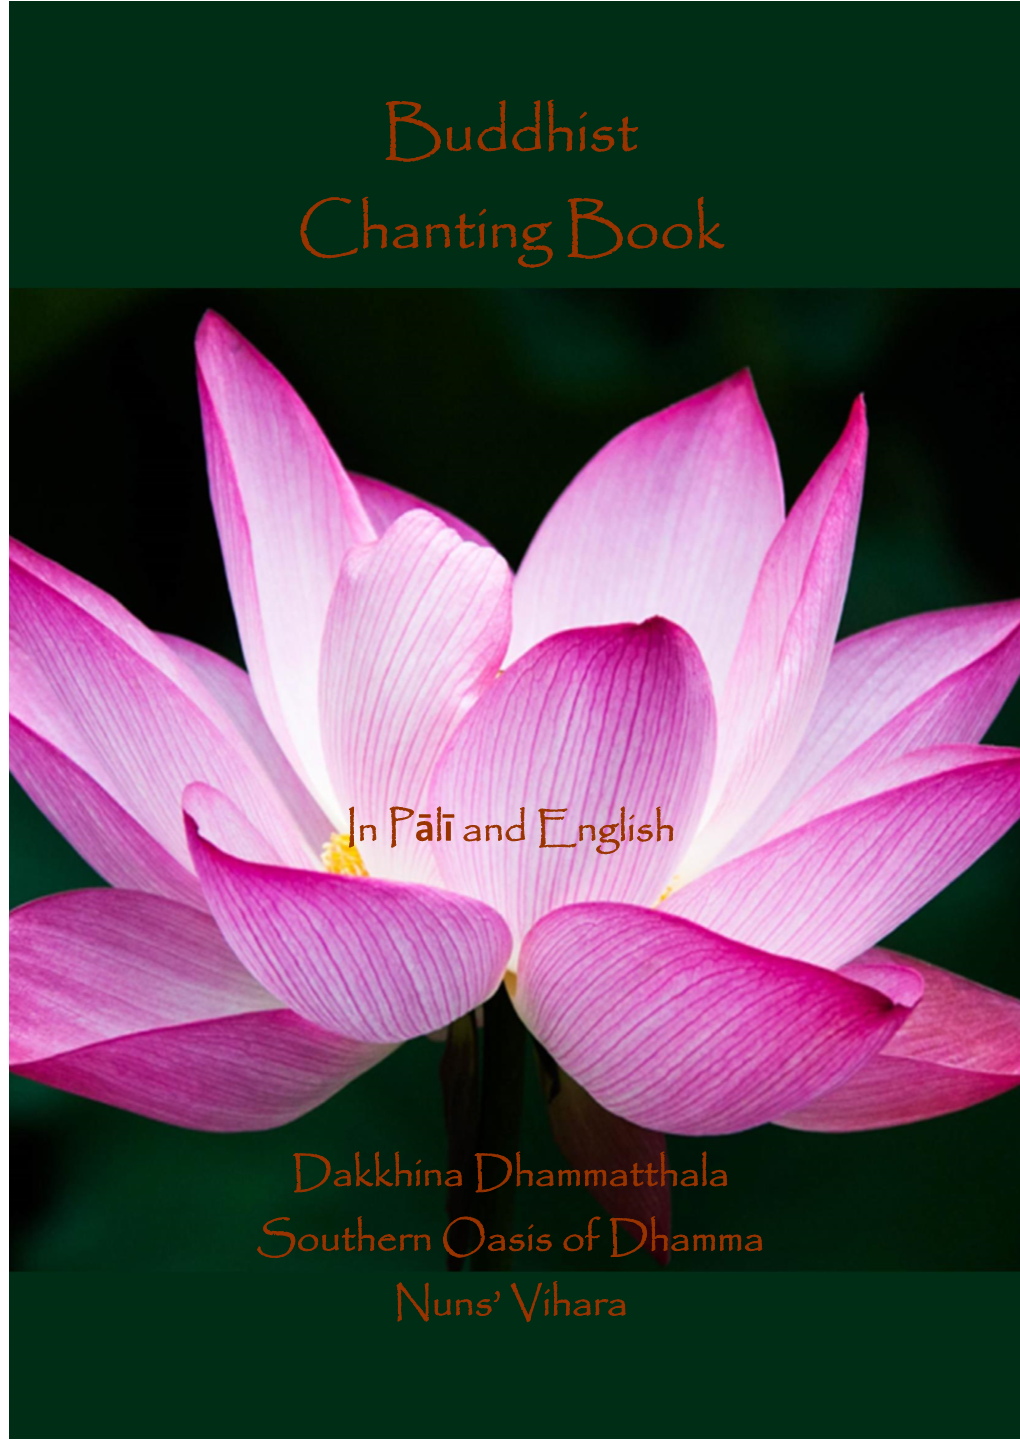 Dakkhina Dhammatthala Chanting Book